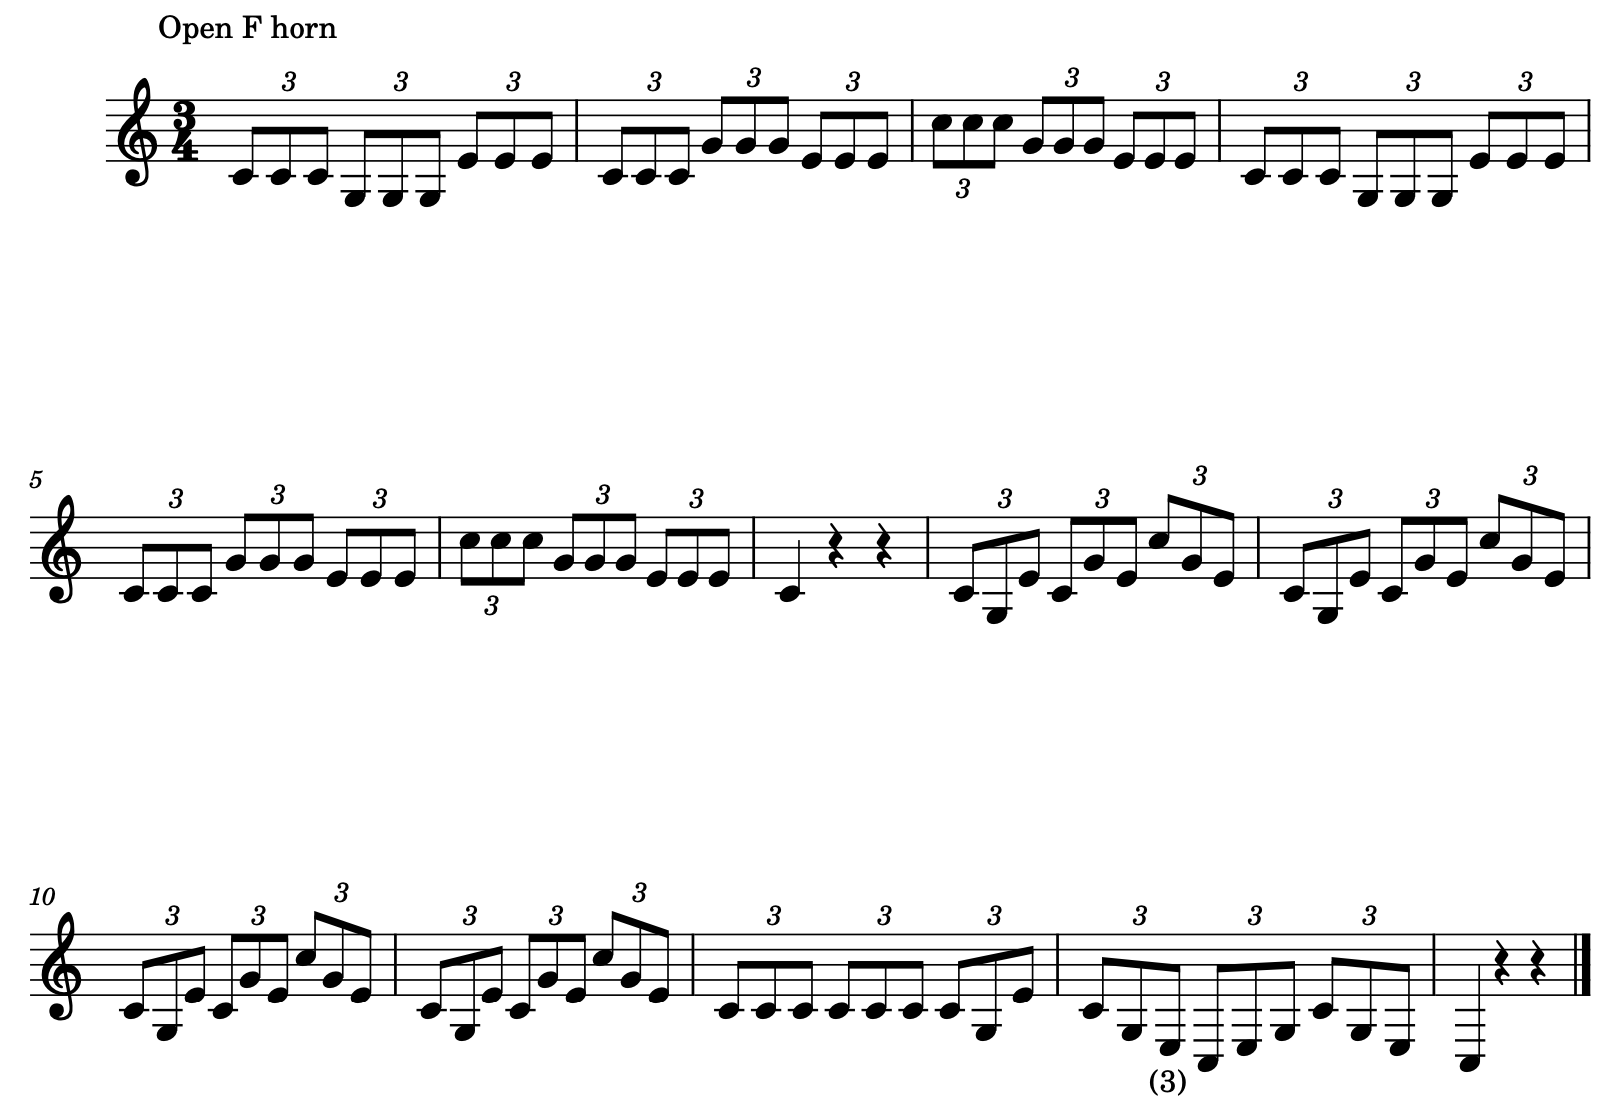 harmonic series articulation exercise